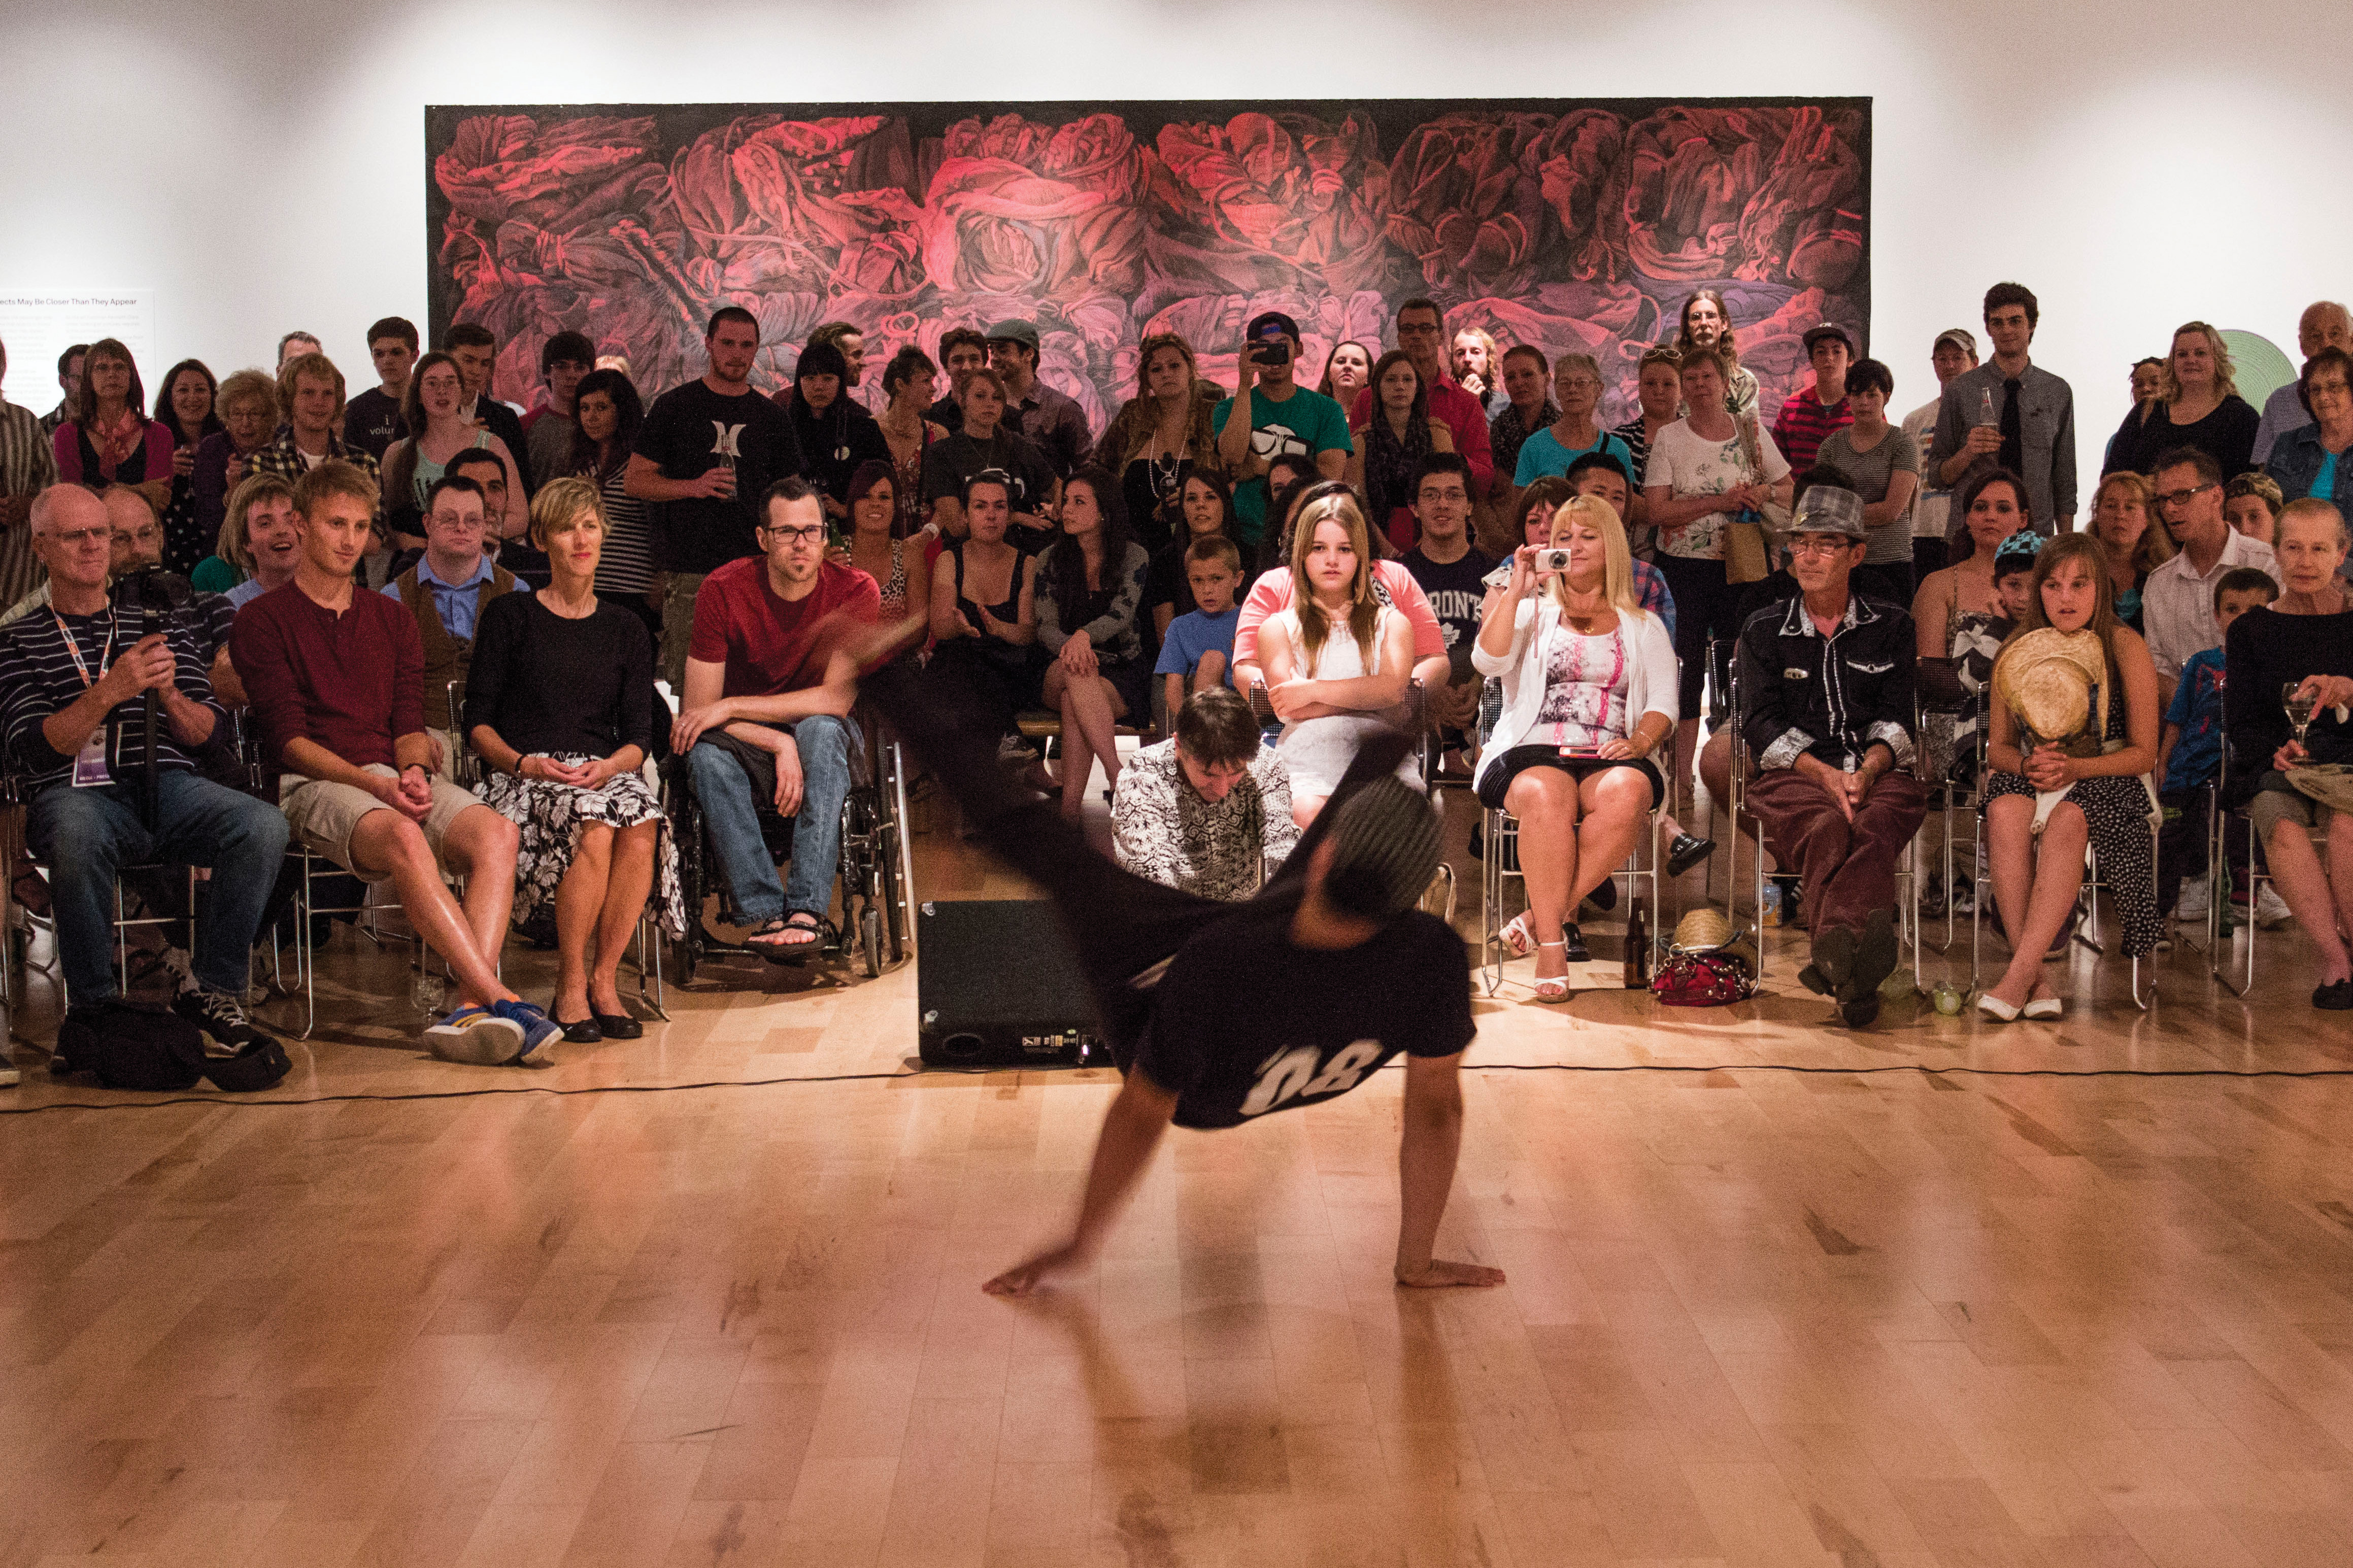 A crowd of people watching a break dancer inside the Robert McLaughlin Gallery